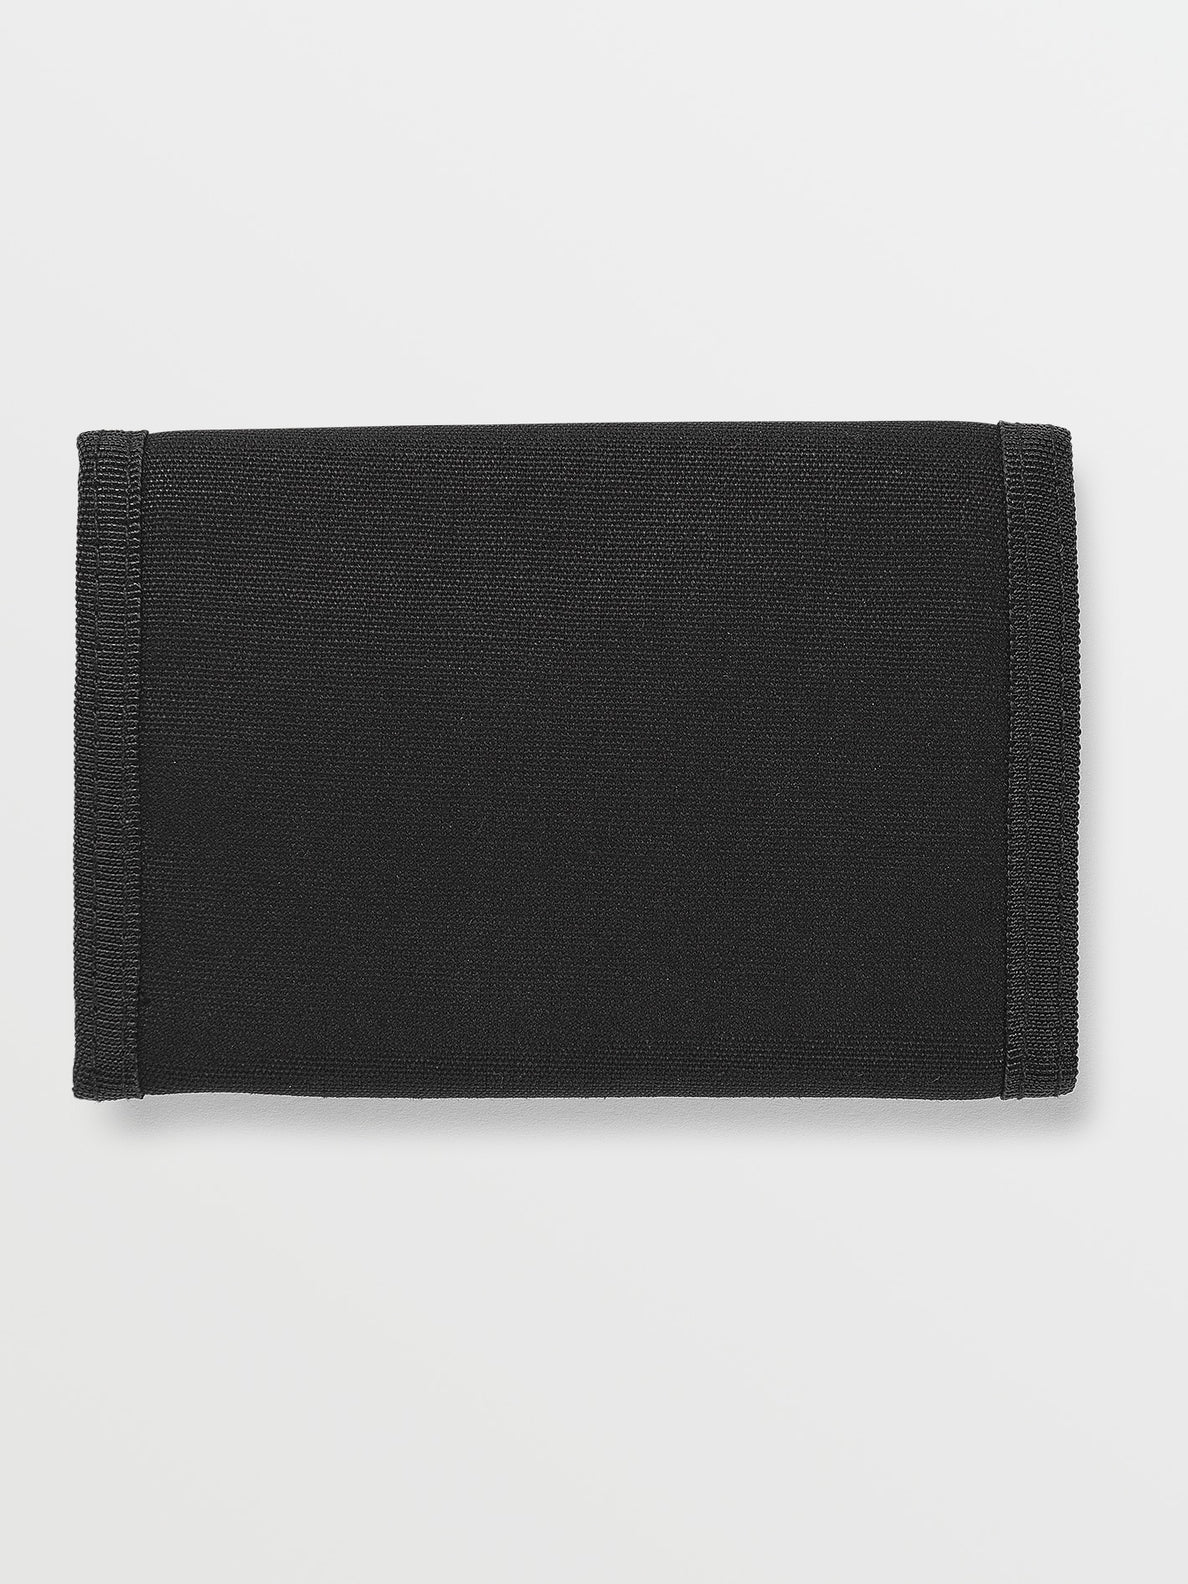 Ranso Trifold Wallet - Black